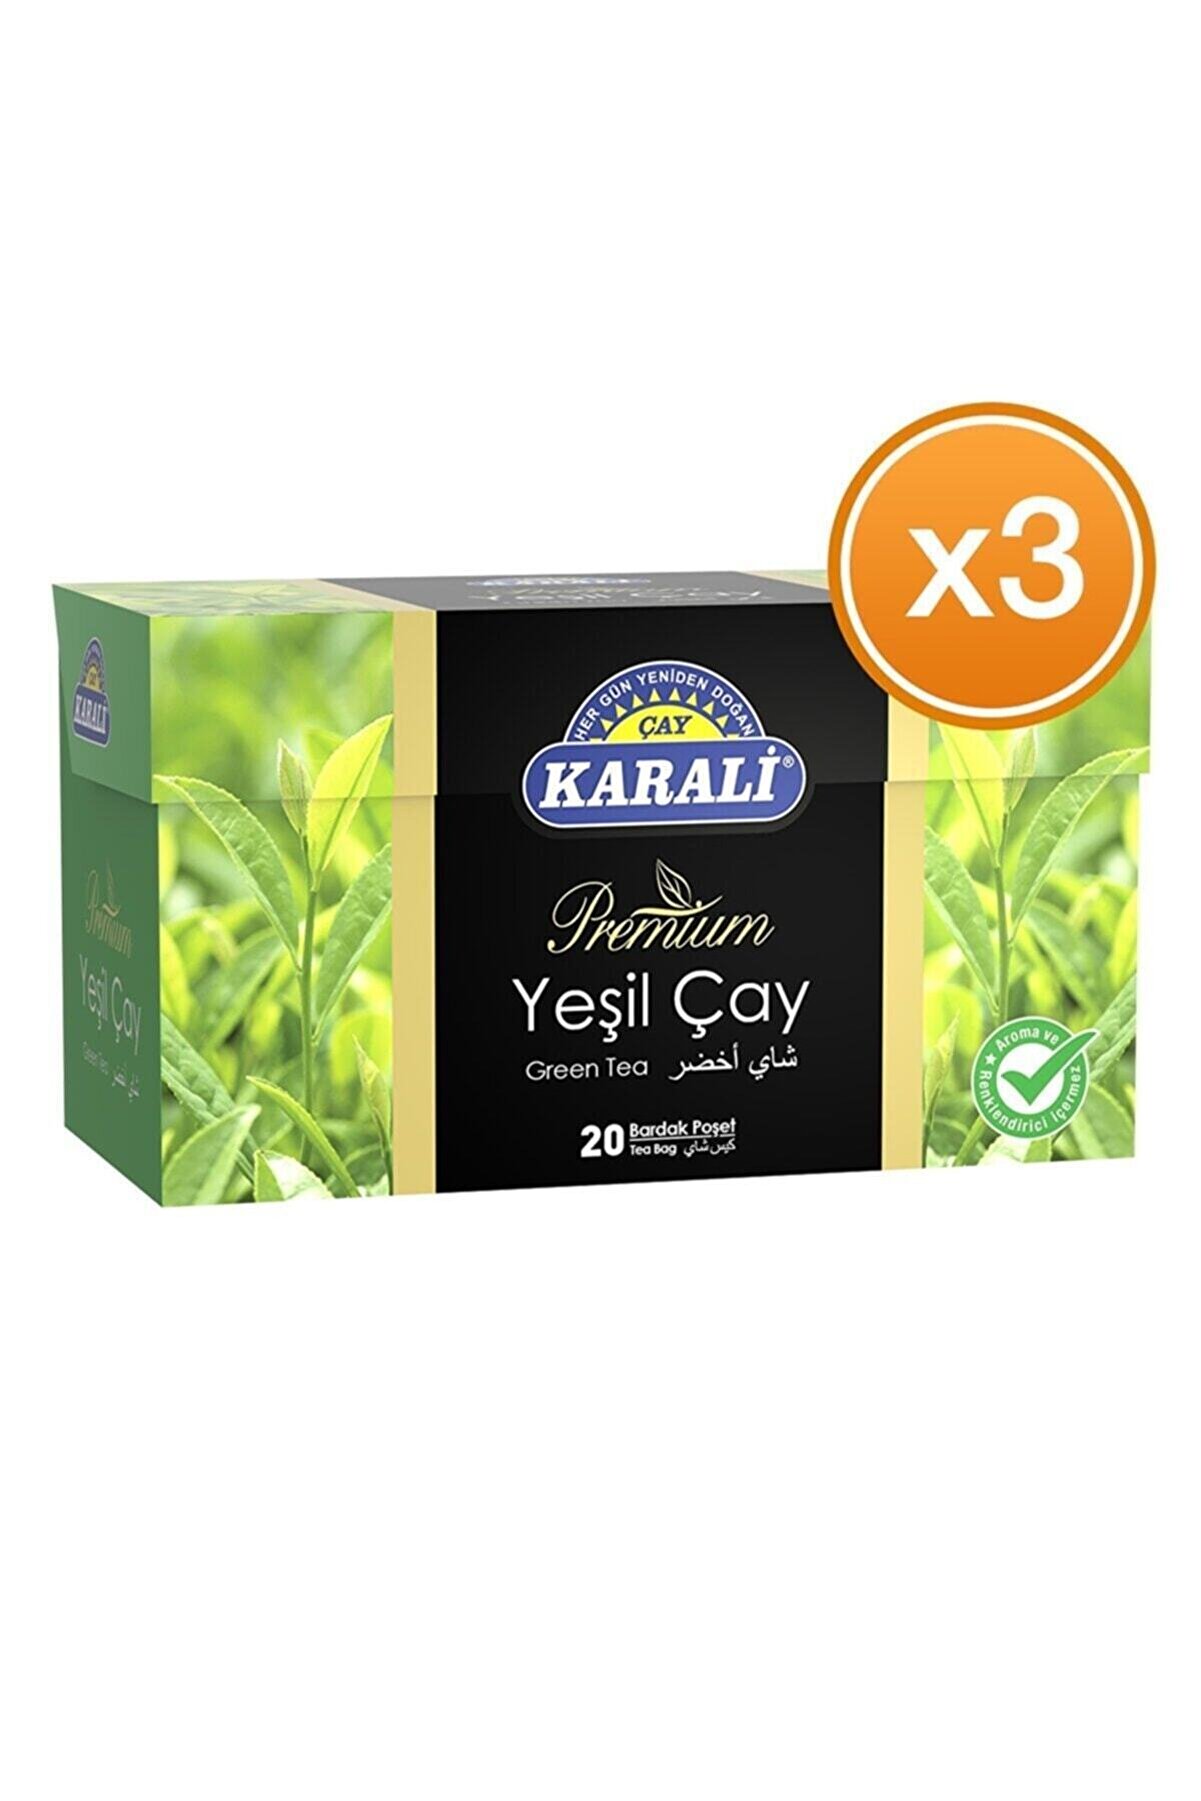 Karali Çay Karali Bardak Poşet Bitki Çayı Yeşil Çay 20'li X 3 Adet